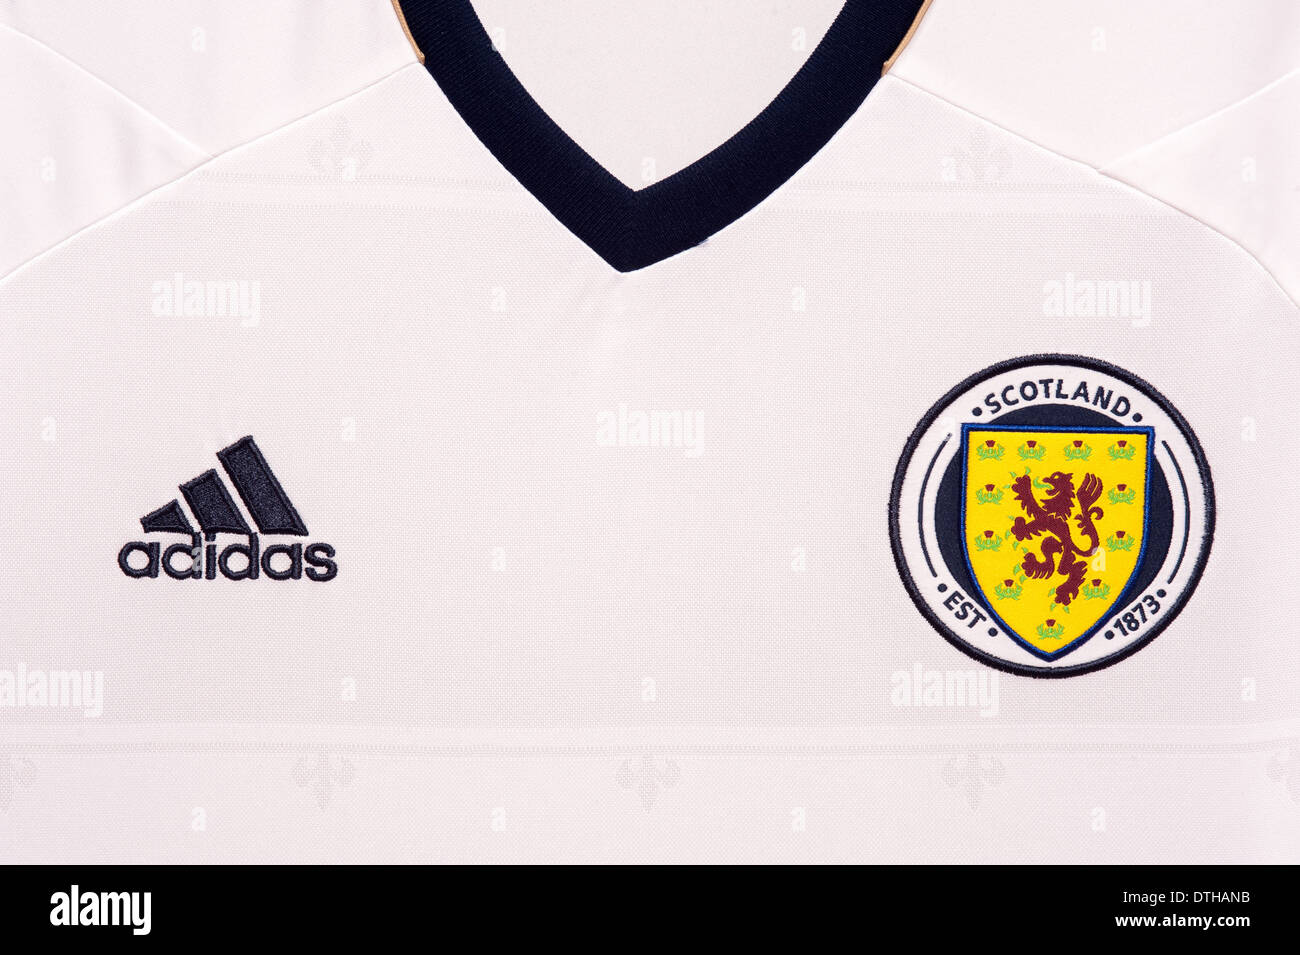 scotland national team jersey